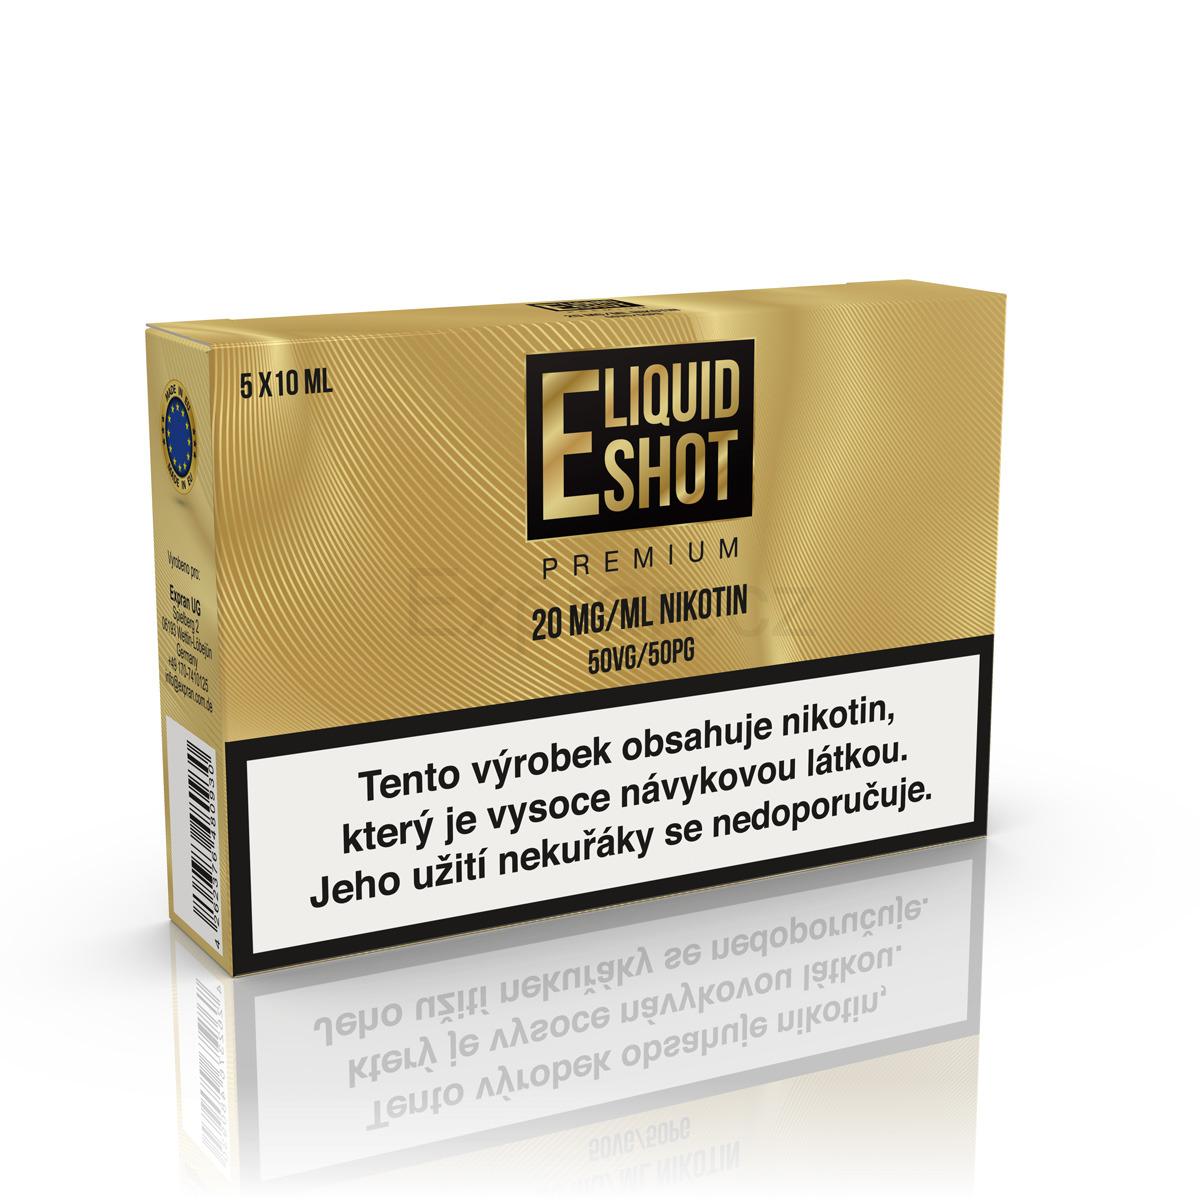 Expran Gmbh (DE) E-Liquid Shot Booster Premium 20mg - 5x10ml (VG50/PG50)